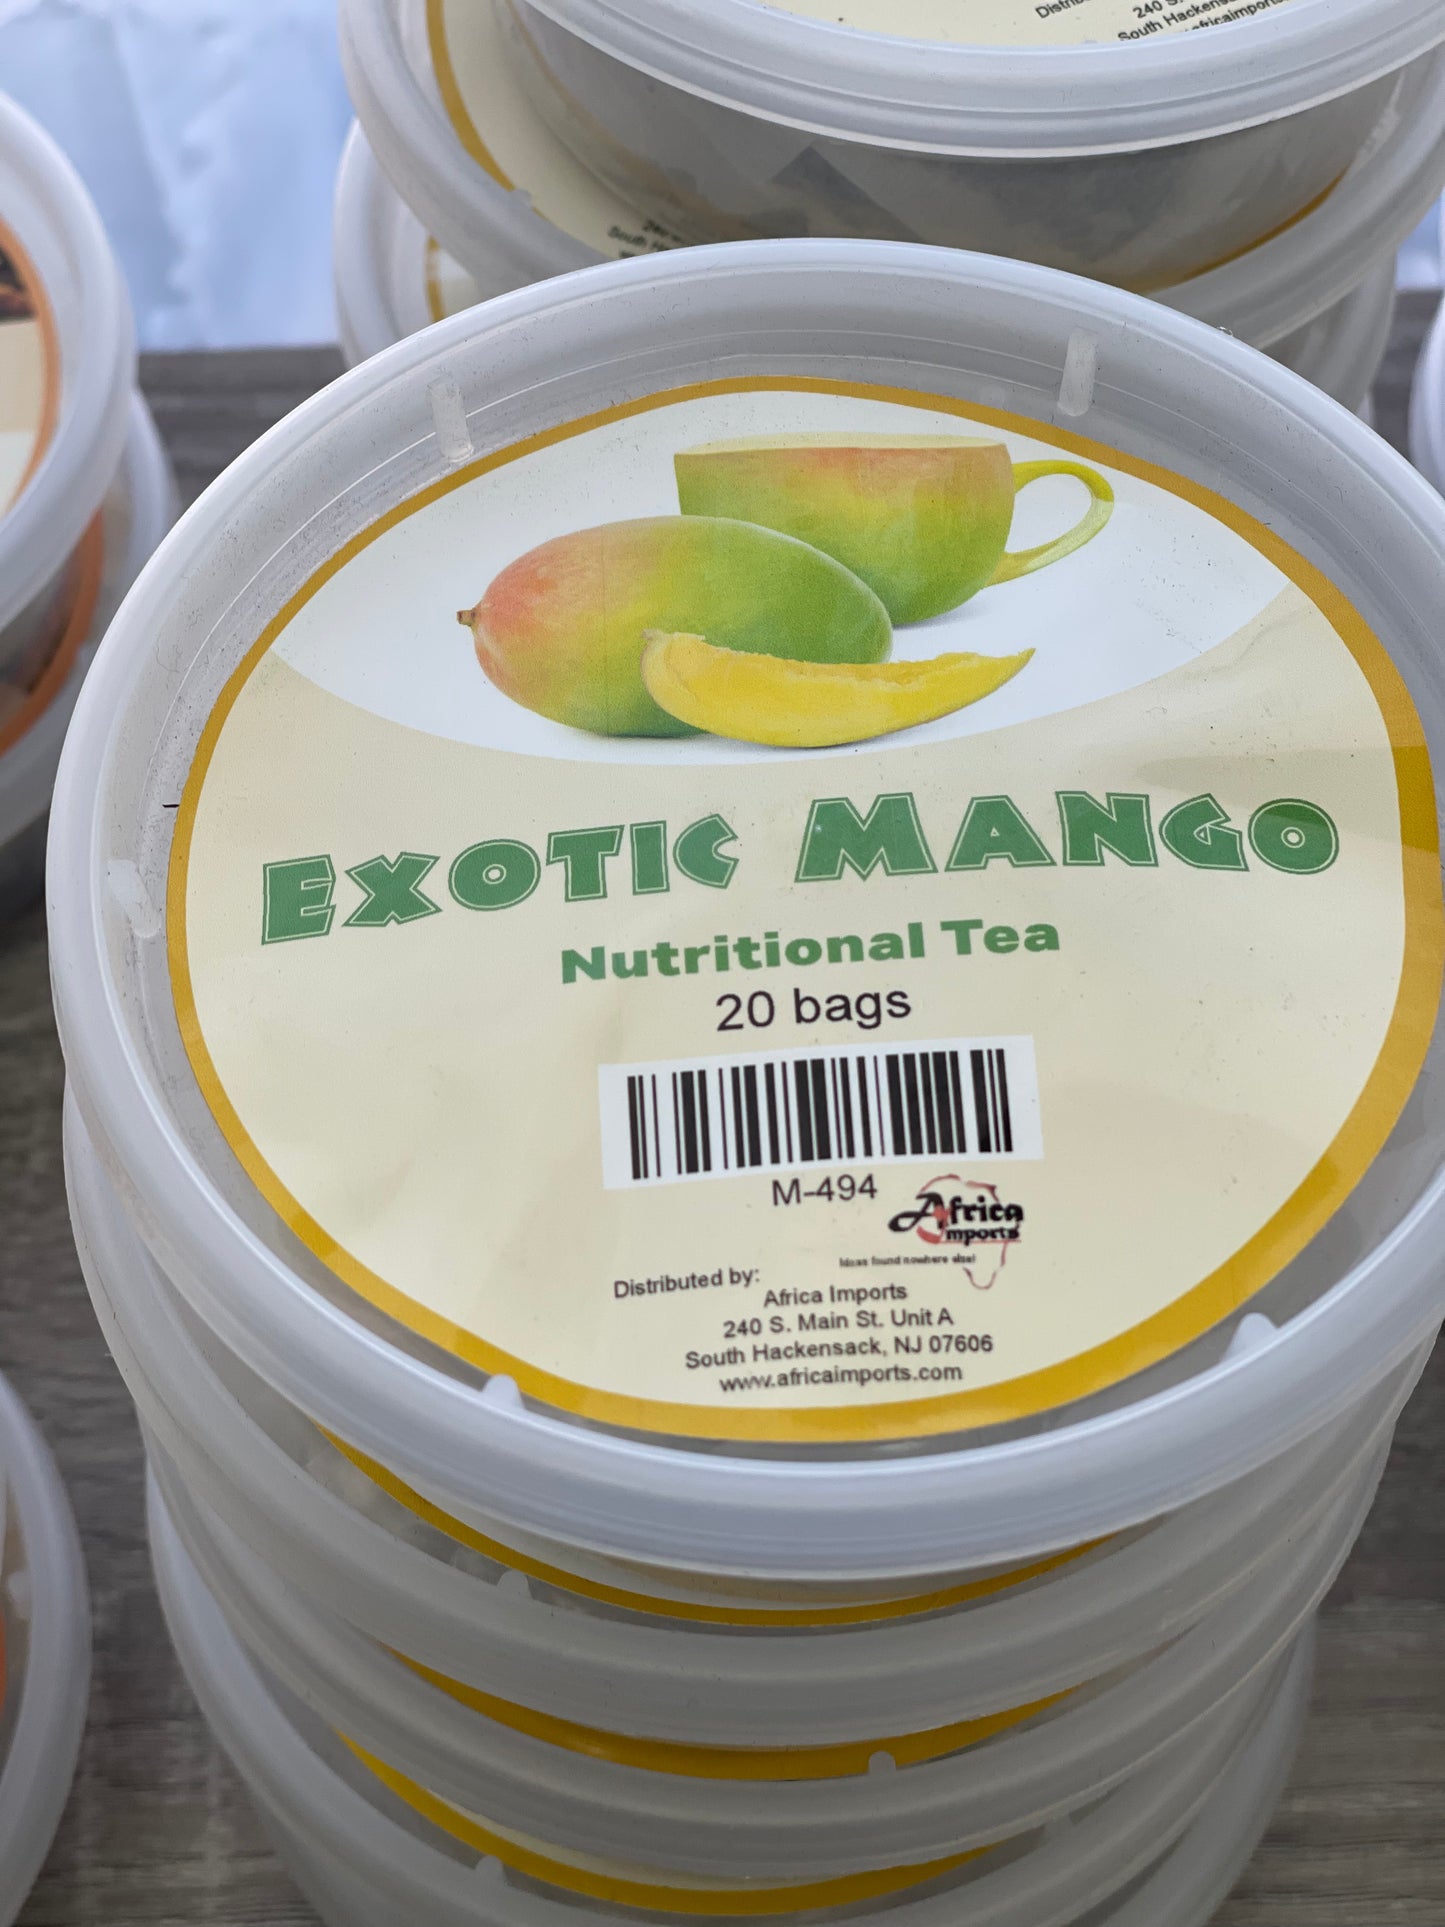 Exotic Mango Nutritional Tea